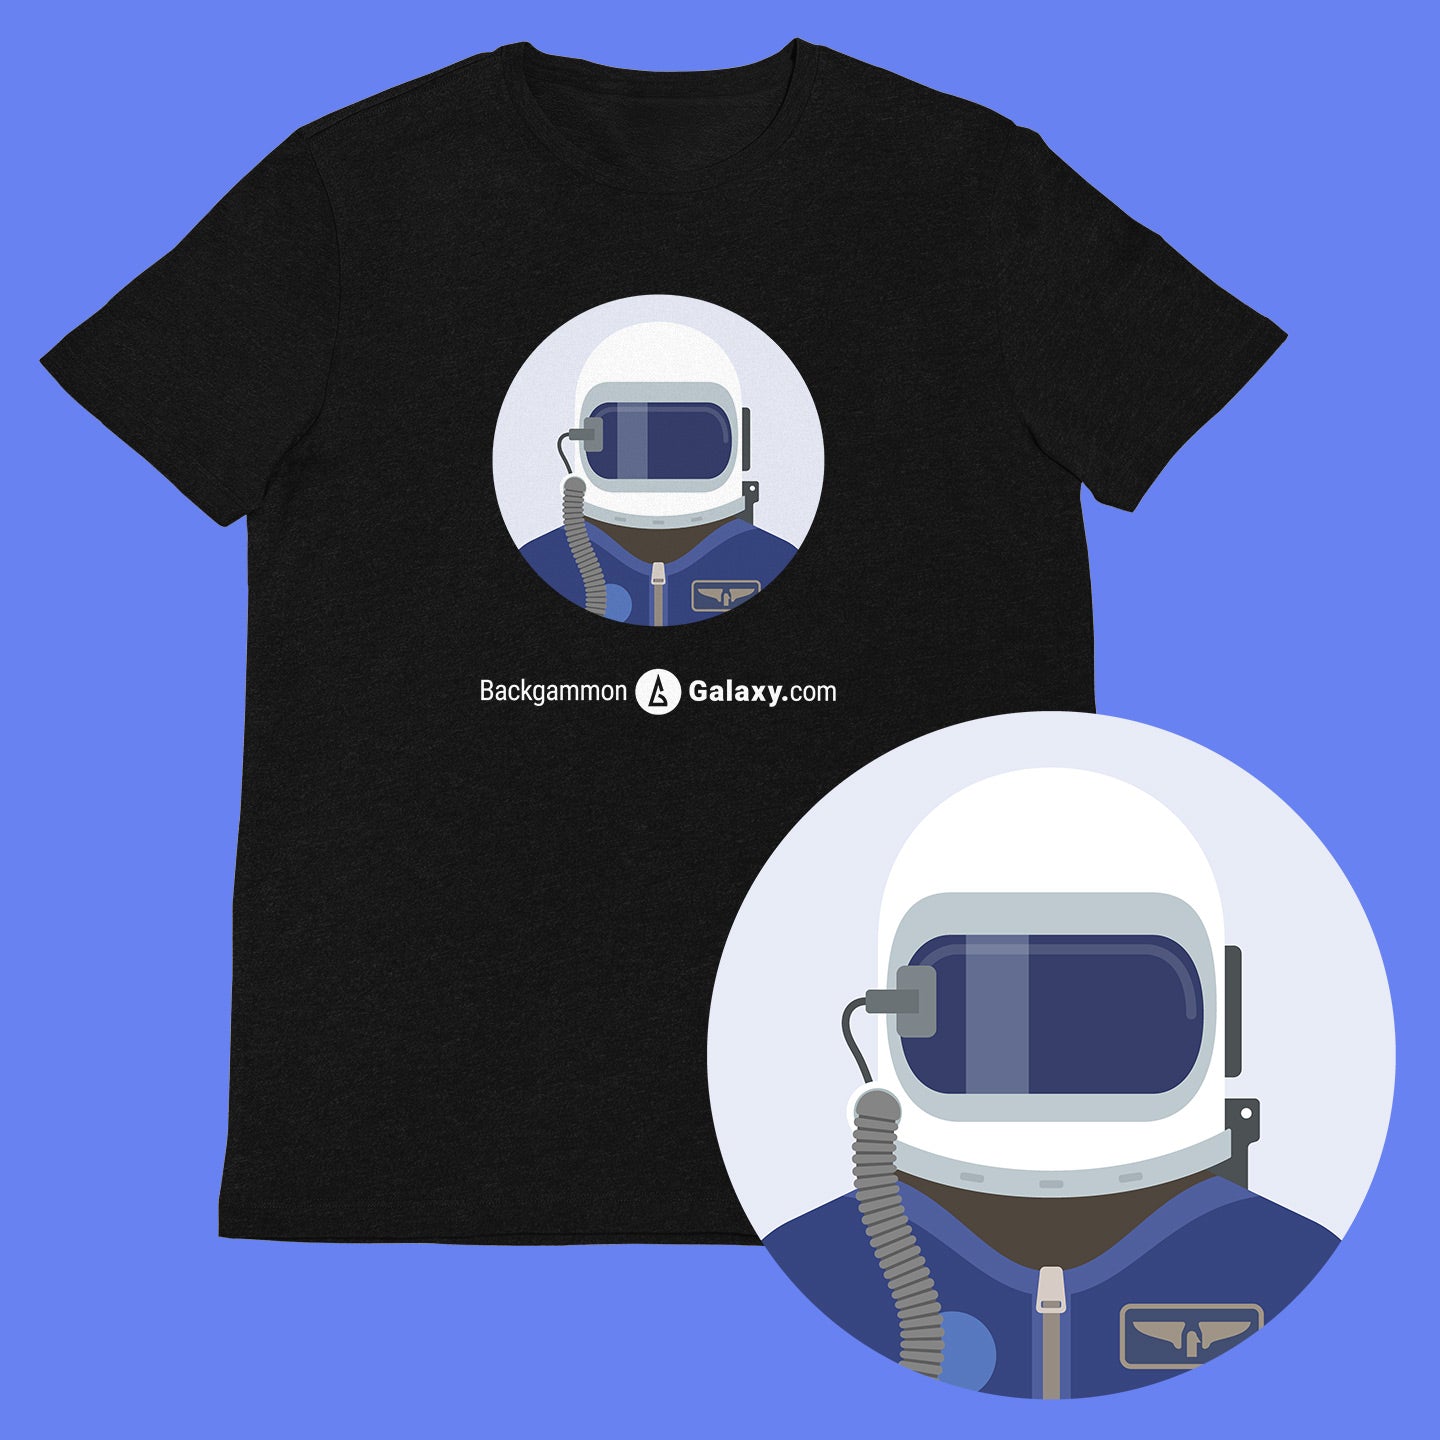 Original Avatar Unisex T-shirt "Ten" - Backgammon Galaxy T-shirt